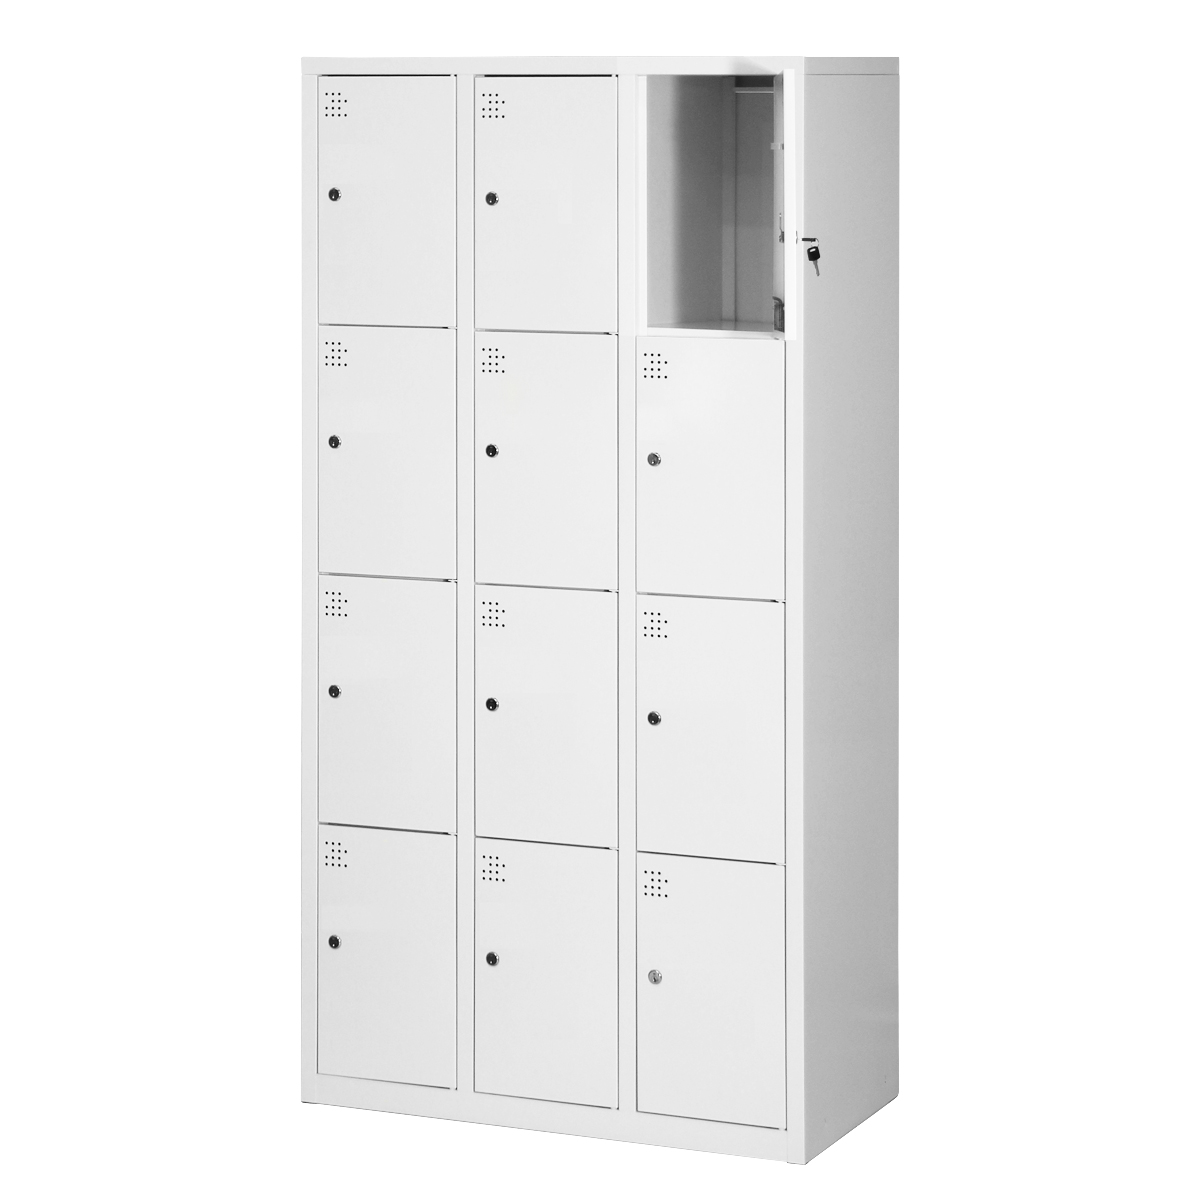 12-Door Storage Cabinet for School Efficient Organization